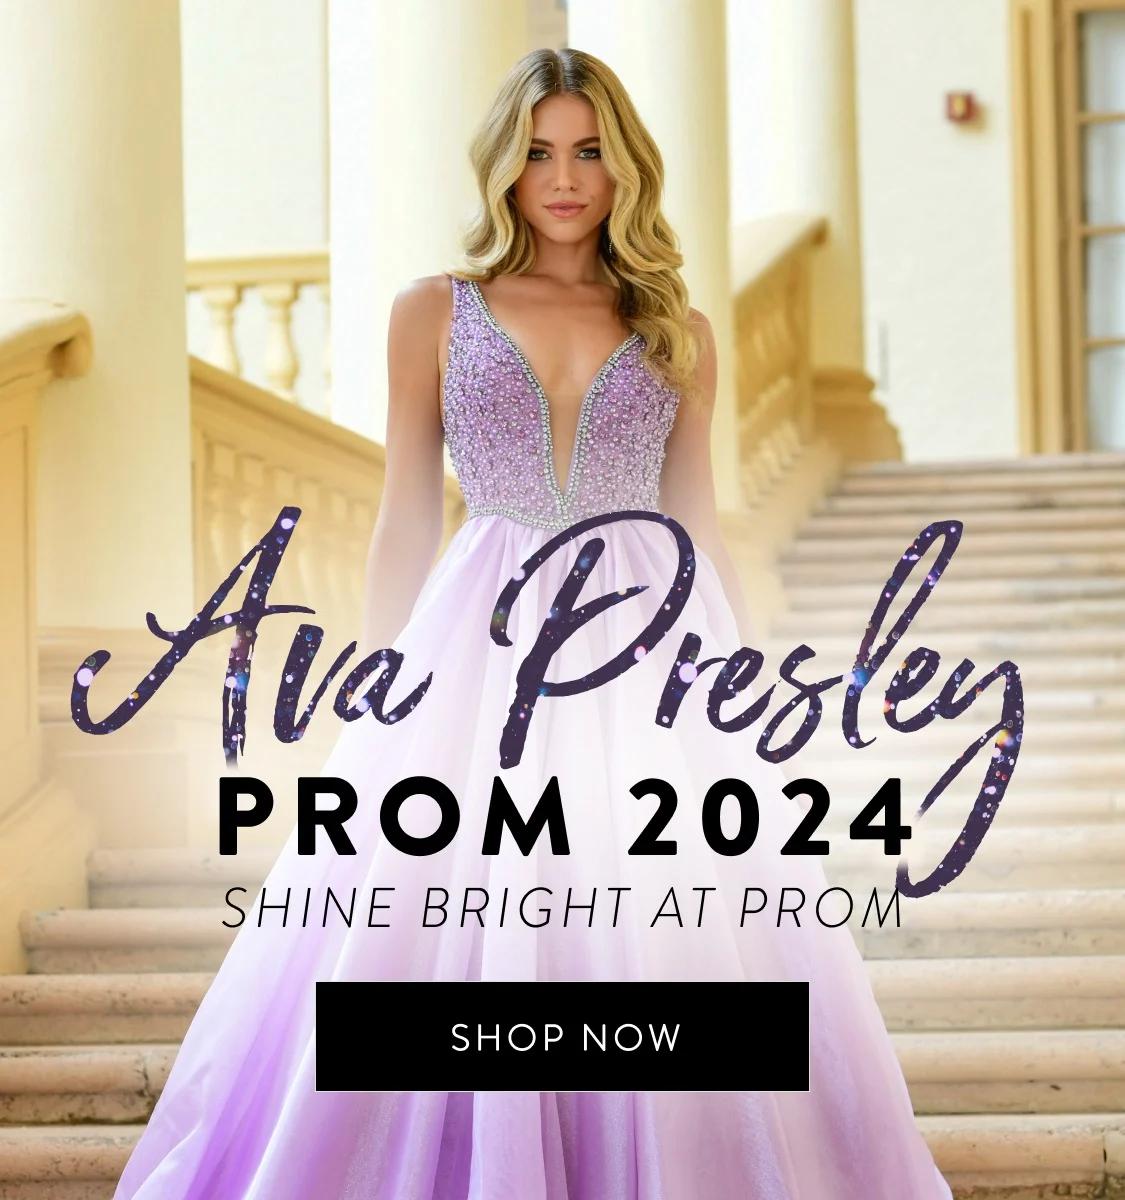 Mobile Ava Presley Prom 2024 Shine Bright At Prom Banner